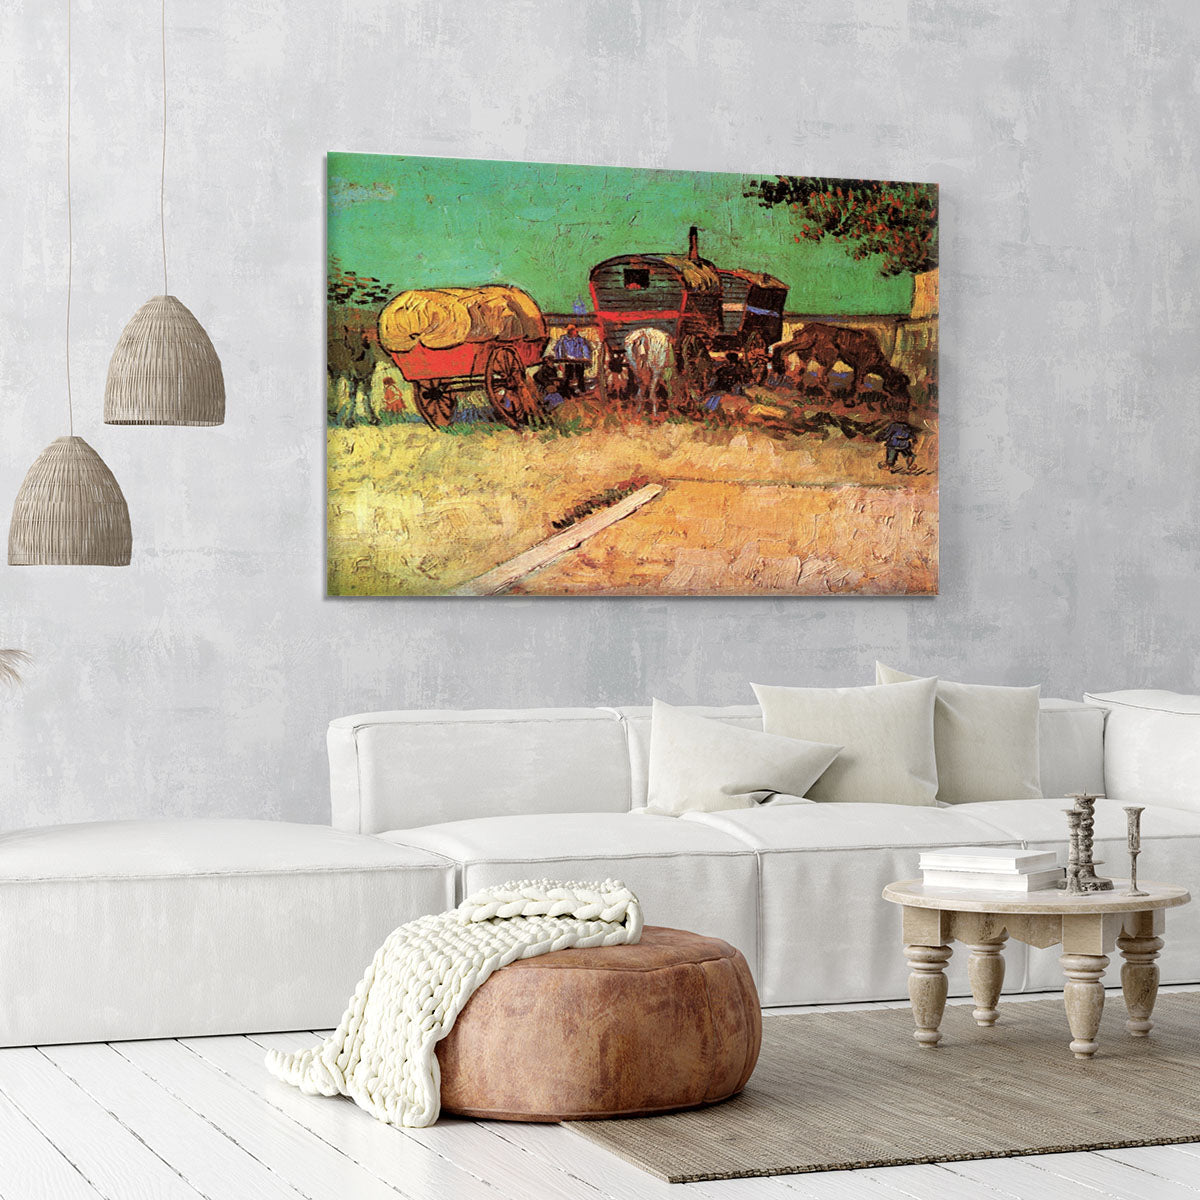 Encampment of Gypsies with Caravans by Van Gogh Canvas Print or Poster - Canvas Art Rocks - 6